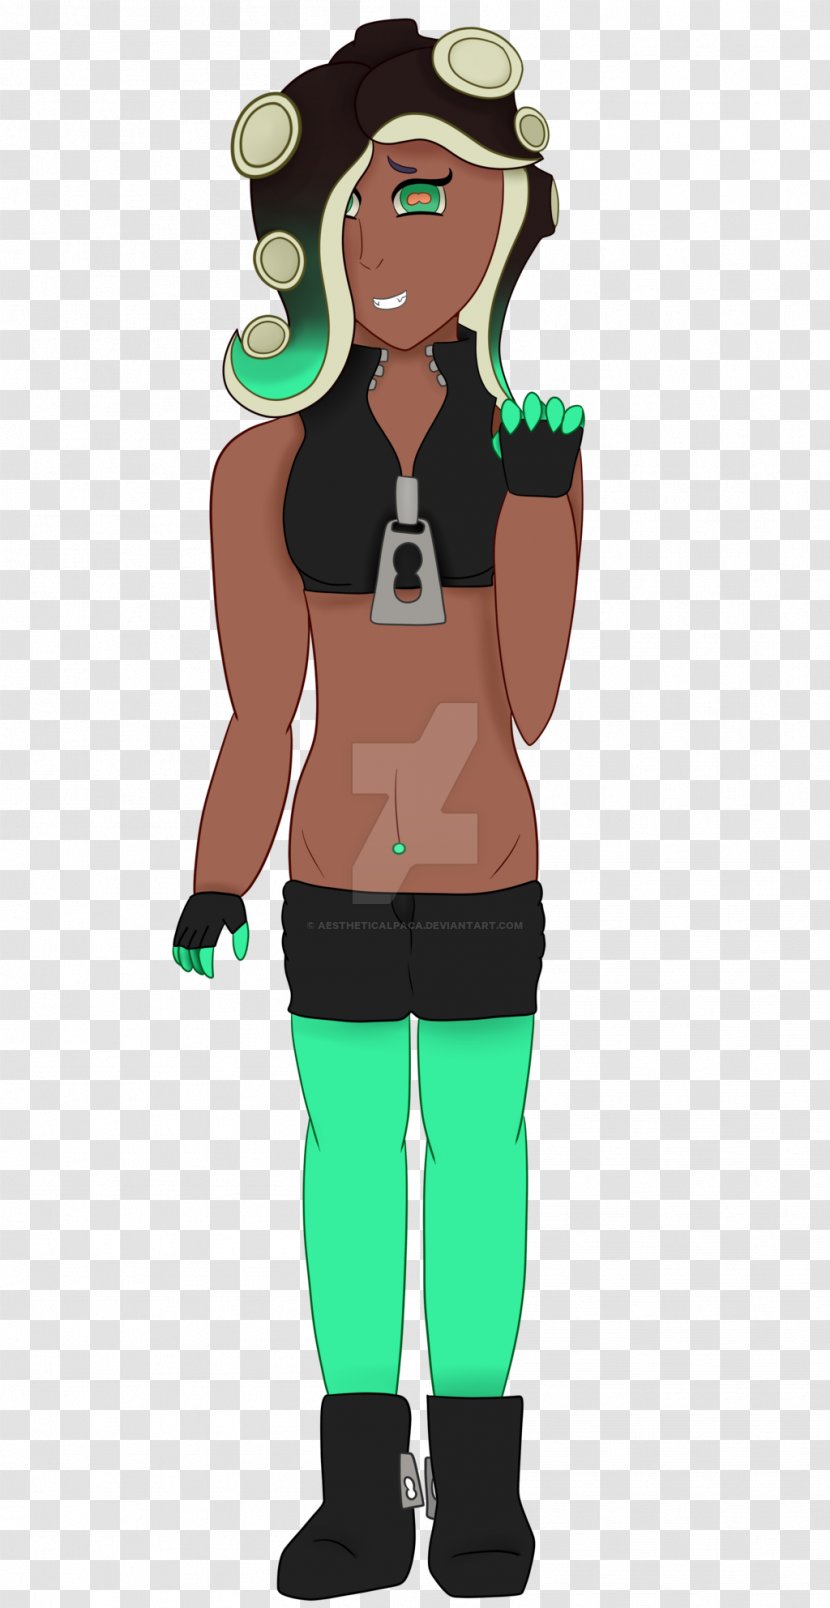 Illustration Cartoon Green Shoulder Mascot - Aesthetic Paint Transparent PNG